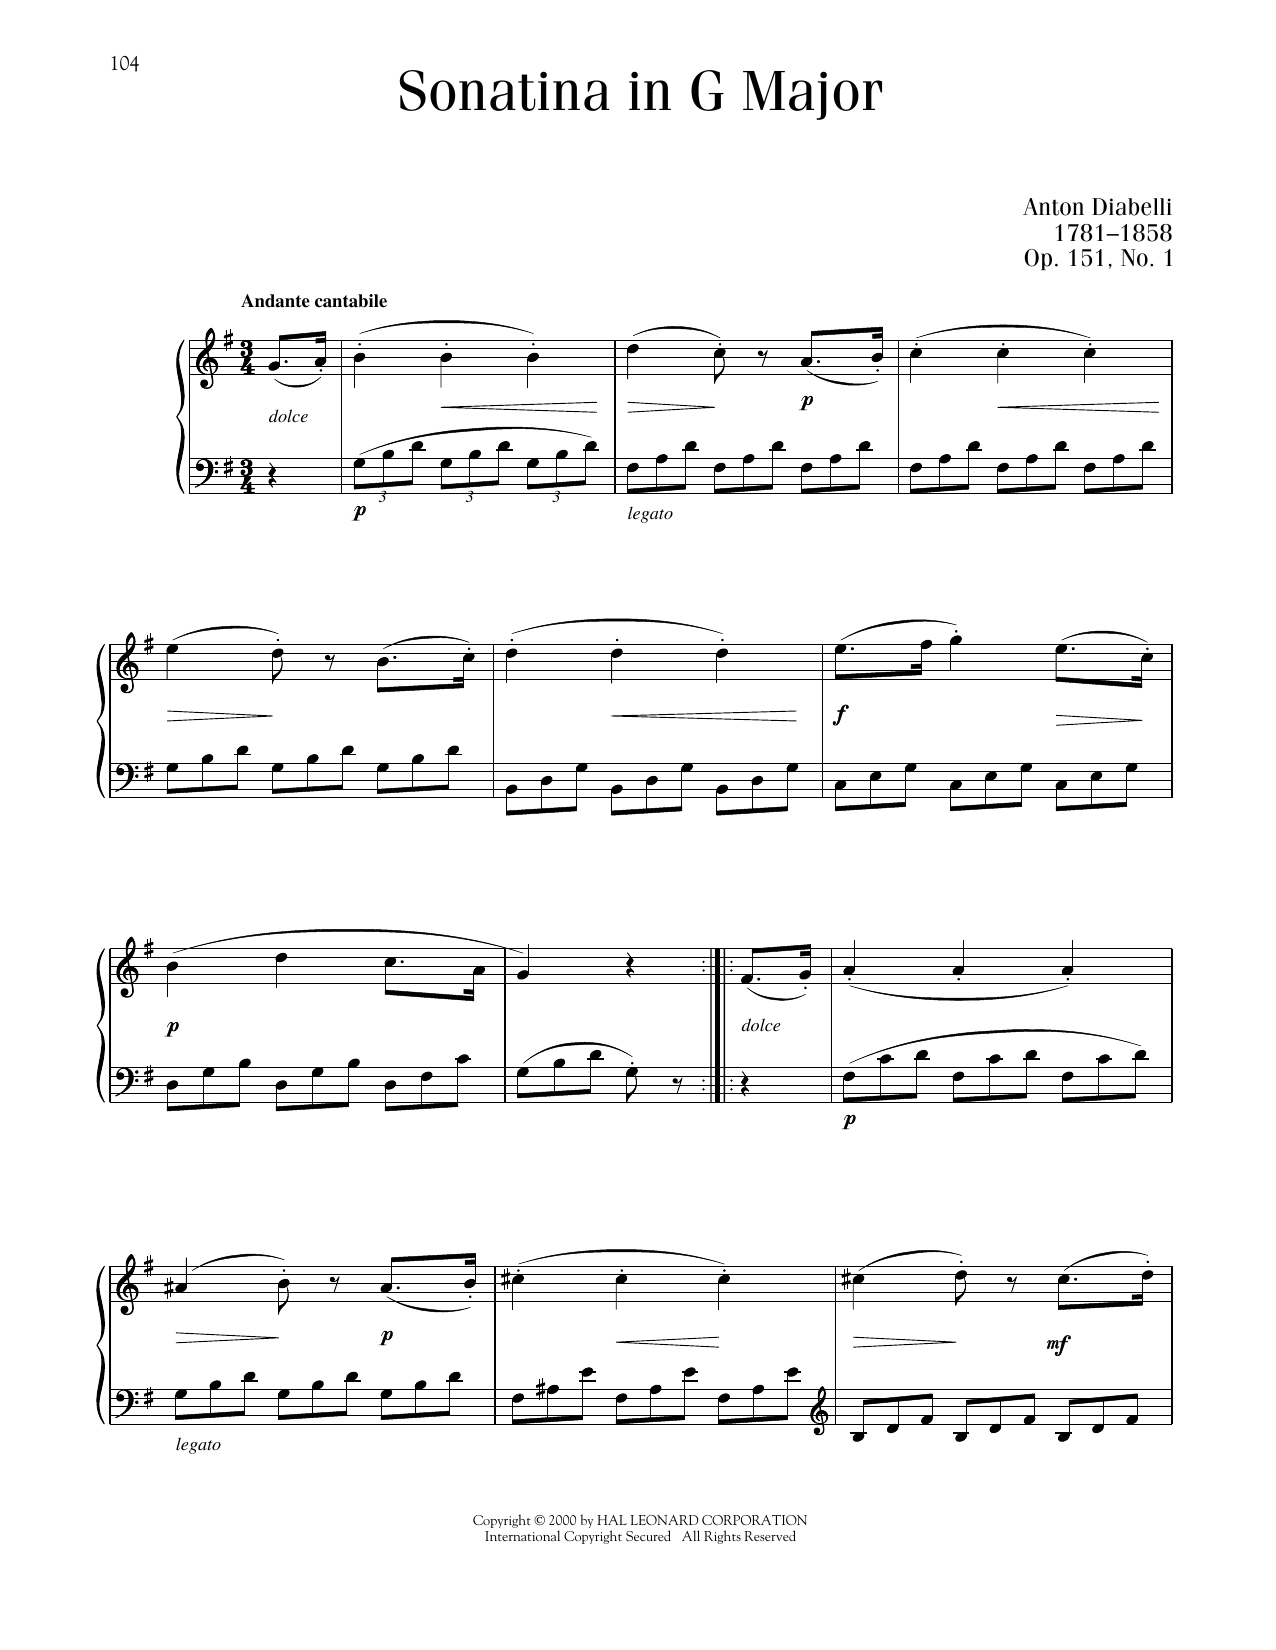 Anton Diabelli Sonatina In G Major, Op. 151, No. 1 sheet music notes printable PDF score